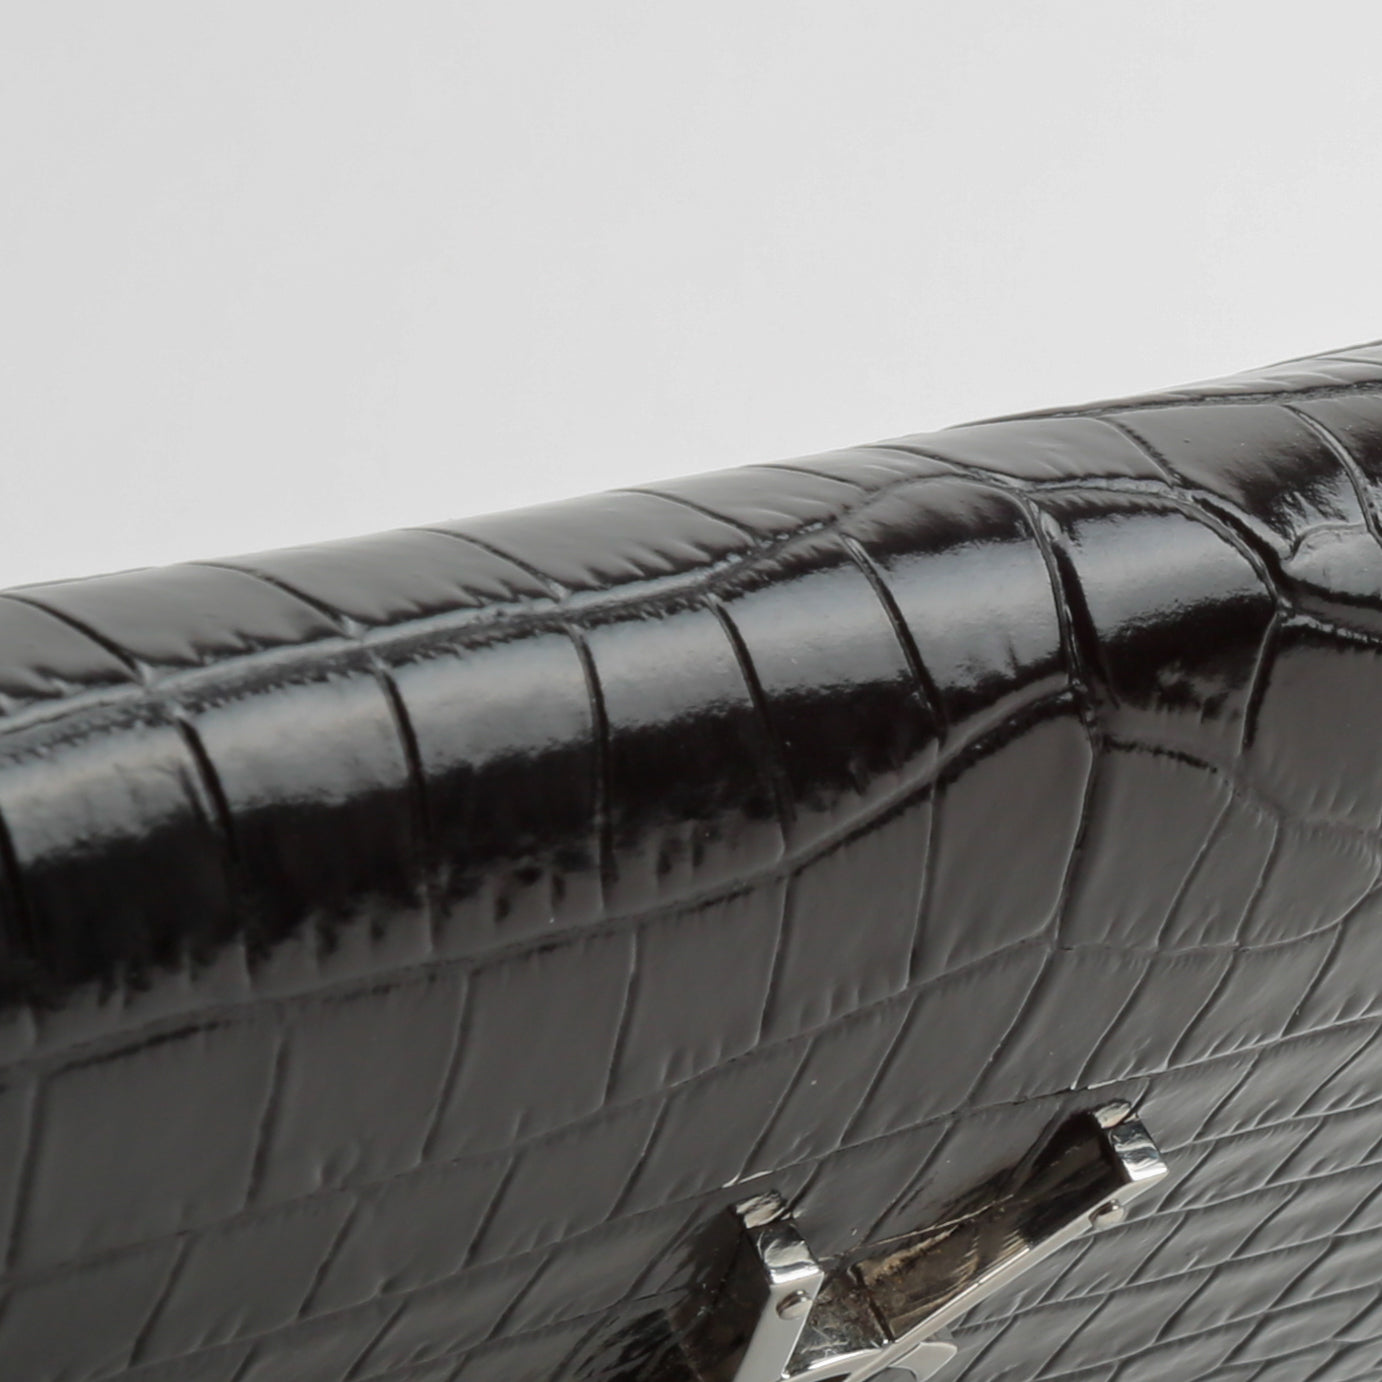 SAINT LAURENT Croc Embossed Uptown Chain Wallet - Black